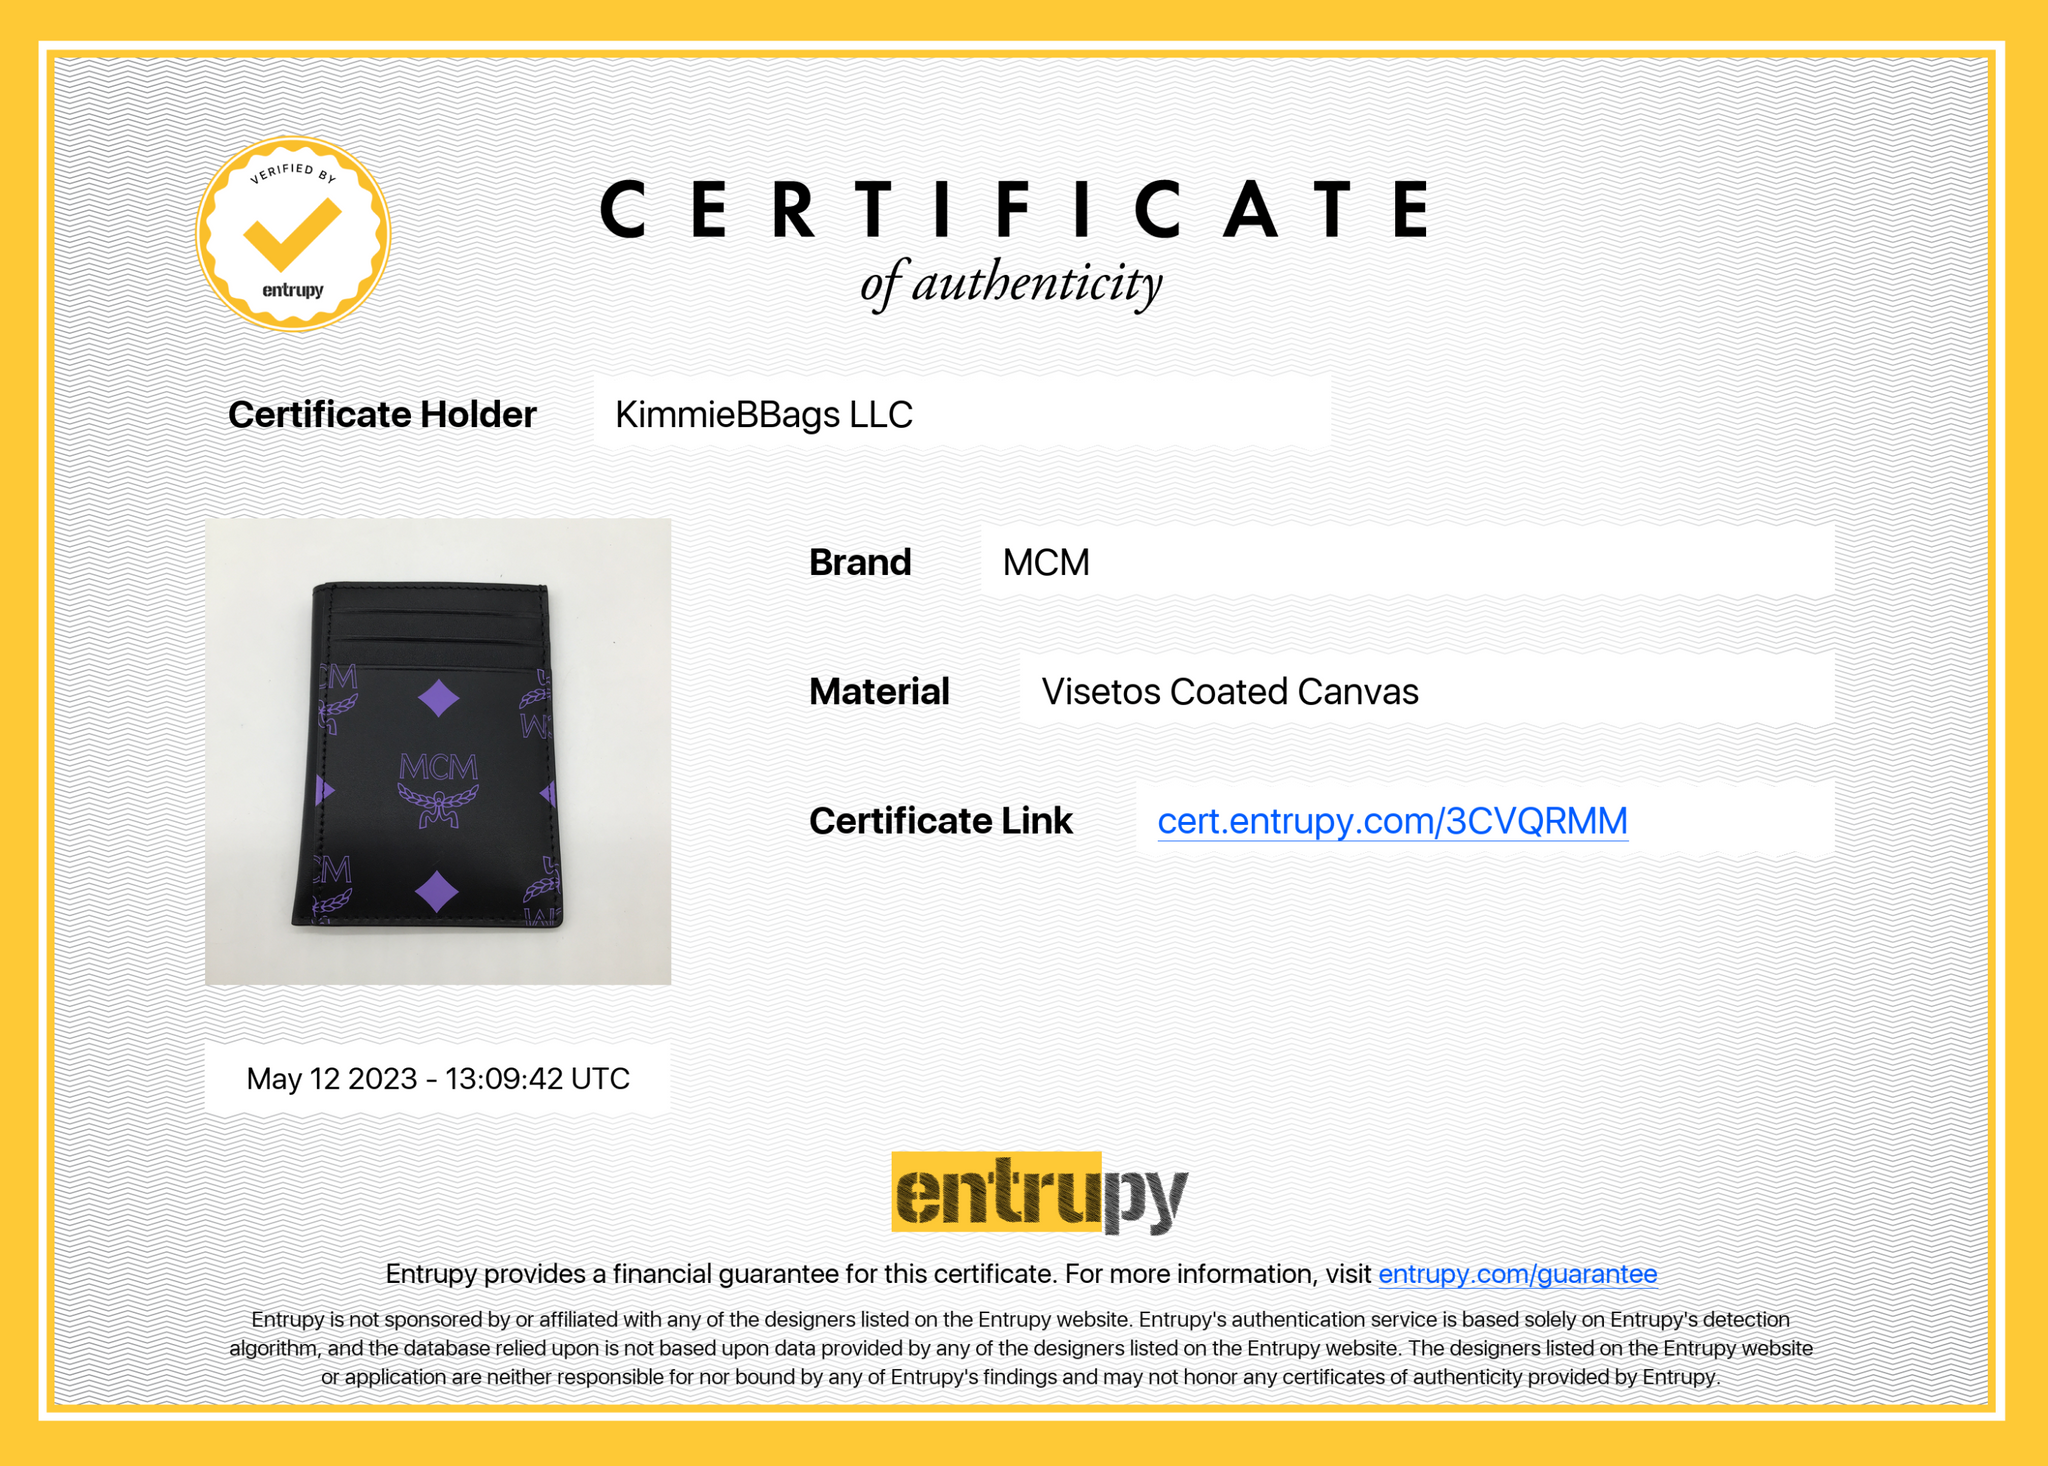 PRELOVED MCM Black and Purple Visetos Leather Cardholder 10112111 052223